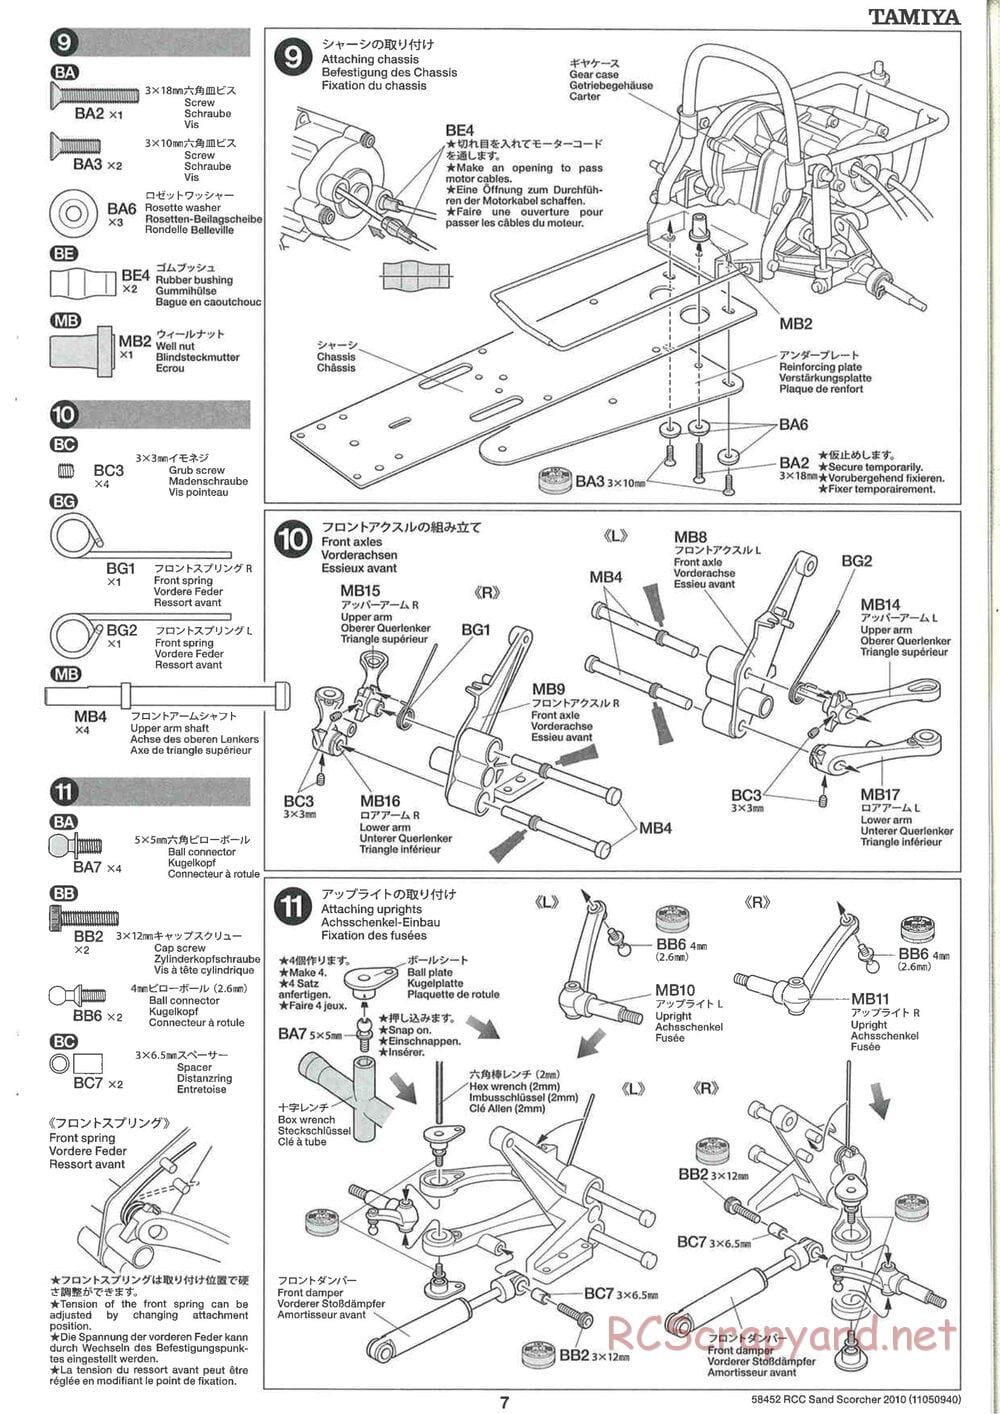 Tamiya - Sand Scorcher 2010 - SRB v1 Chassis - Manual - Page 7